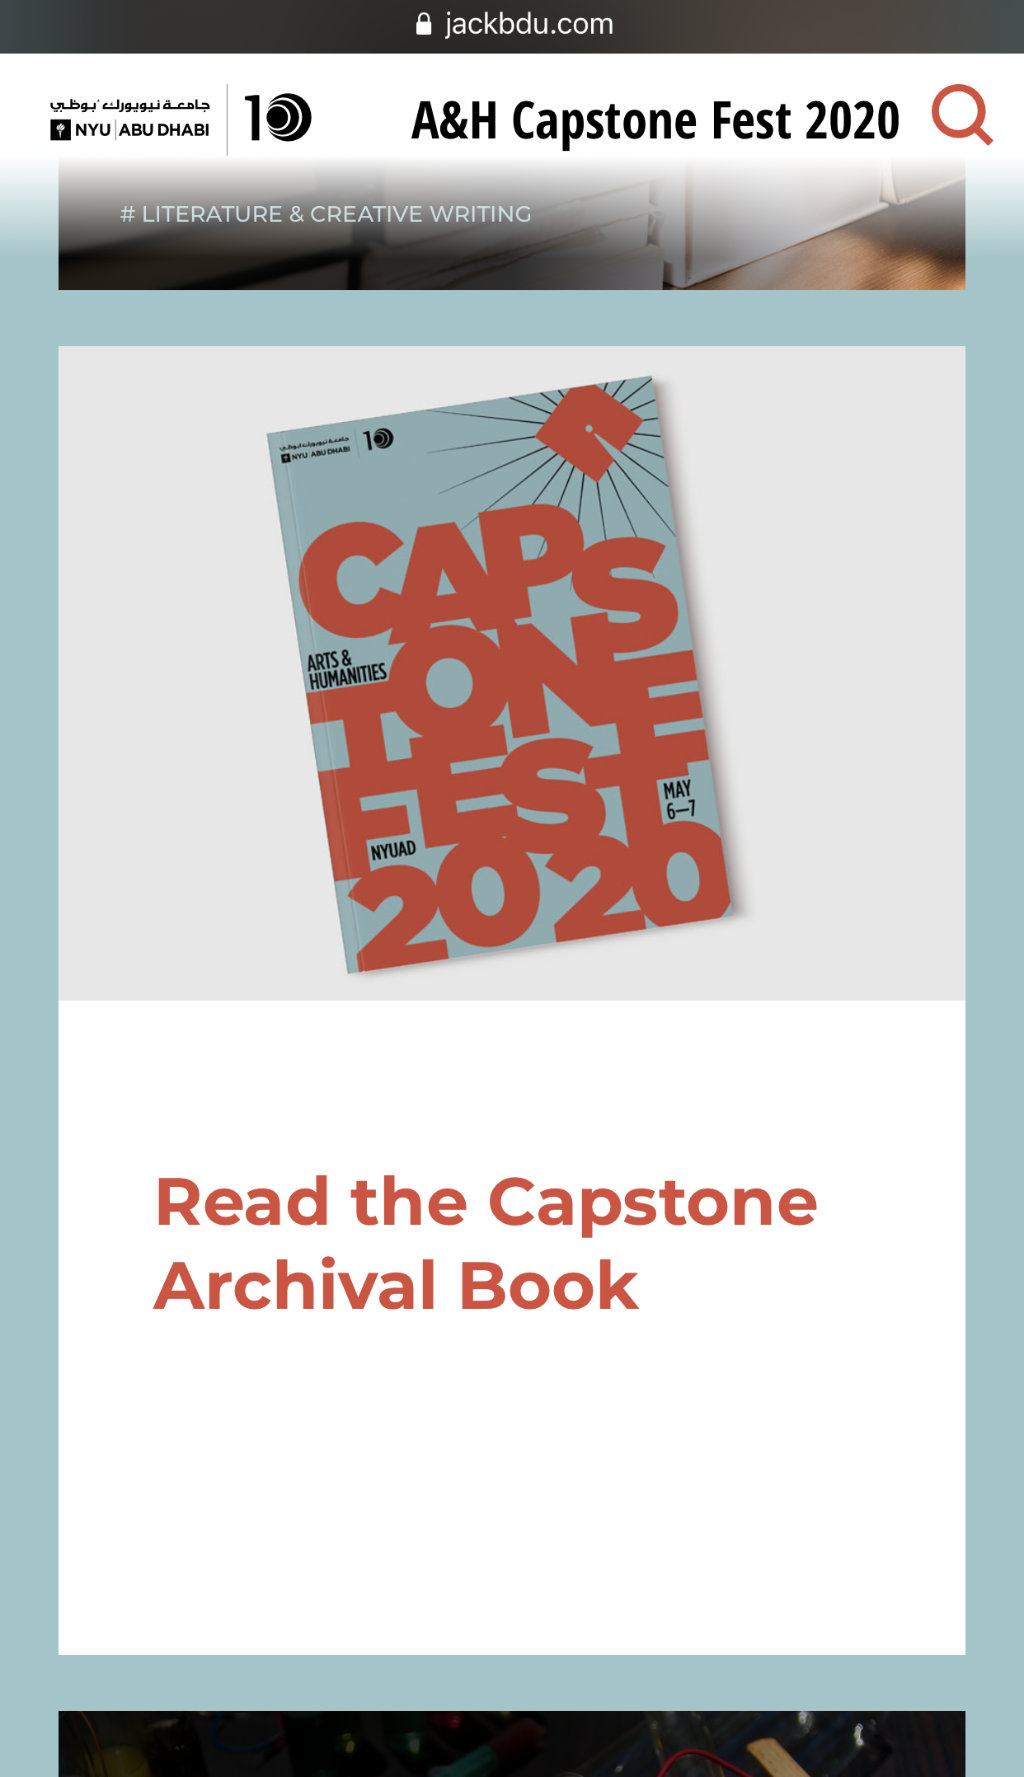 Capstone Festival Website - Capstone Archival Book on Mobile